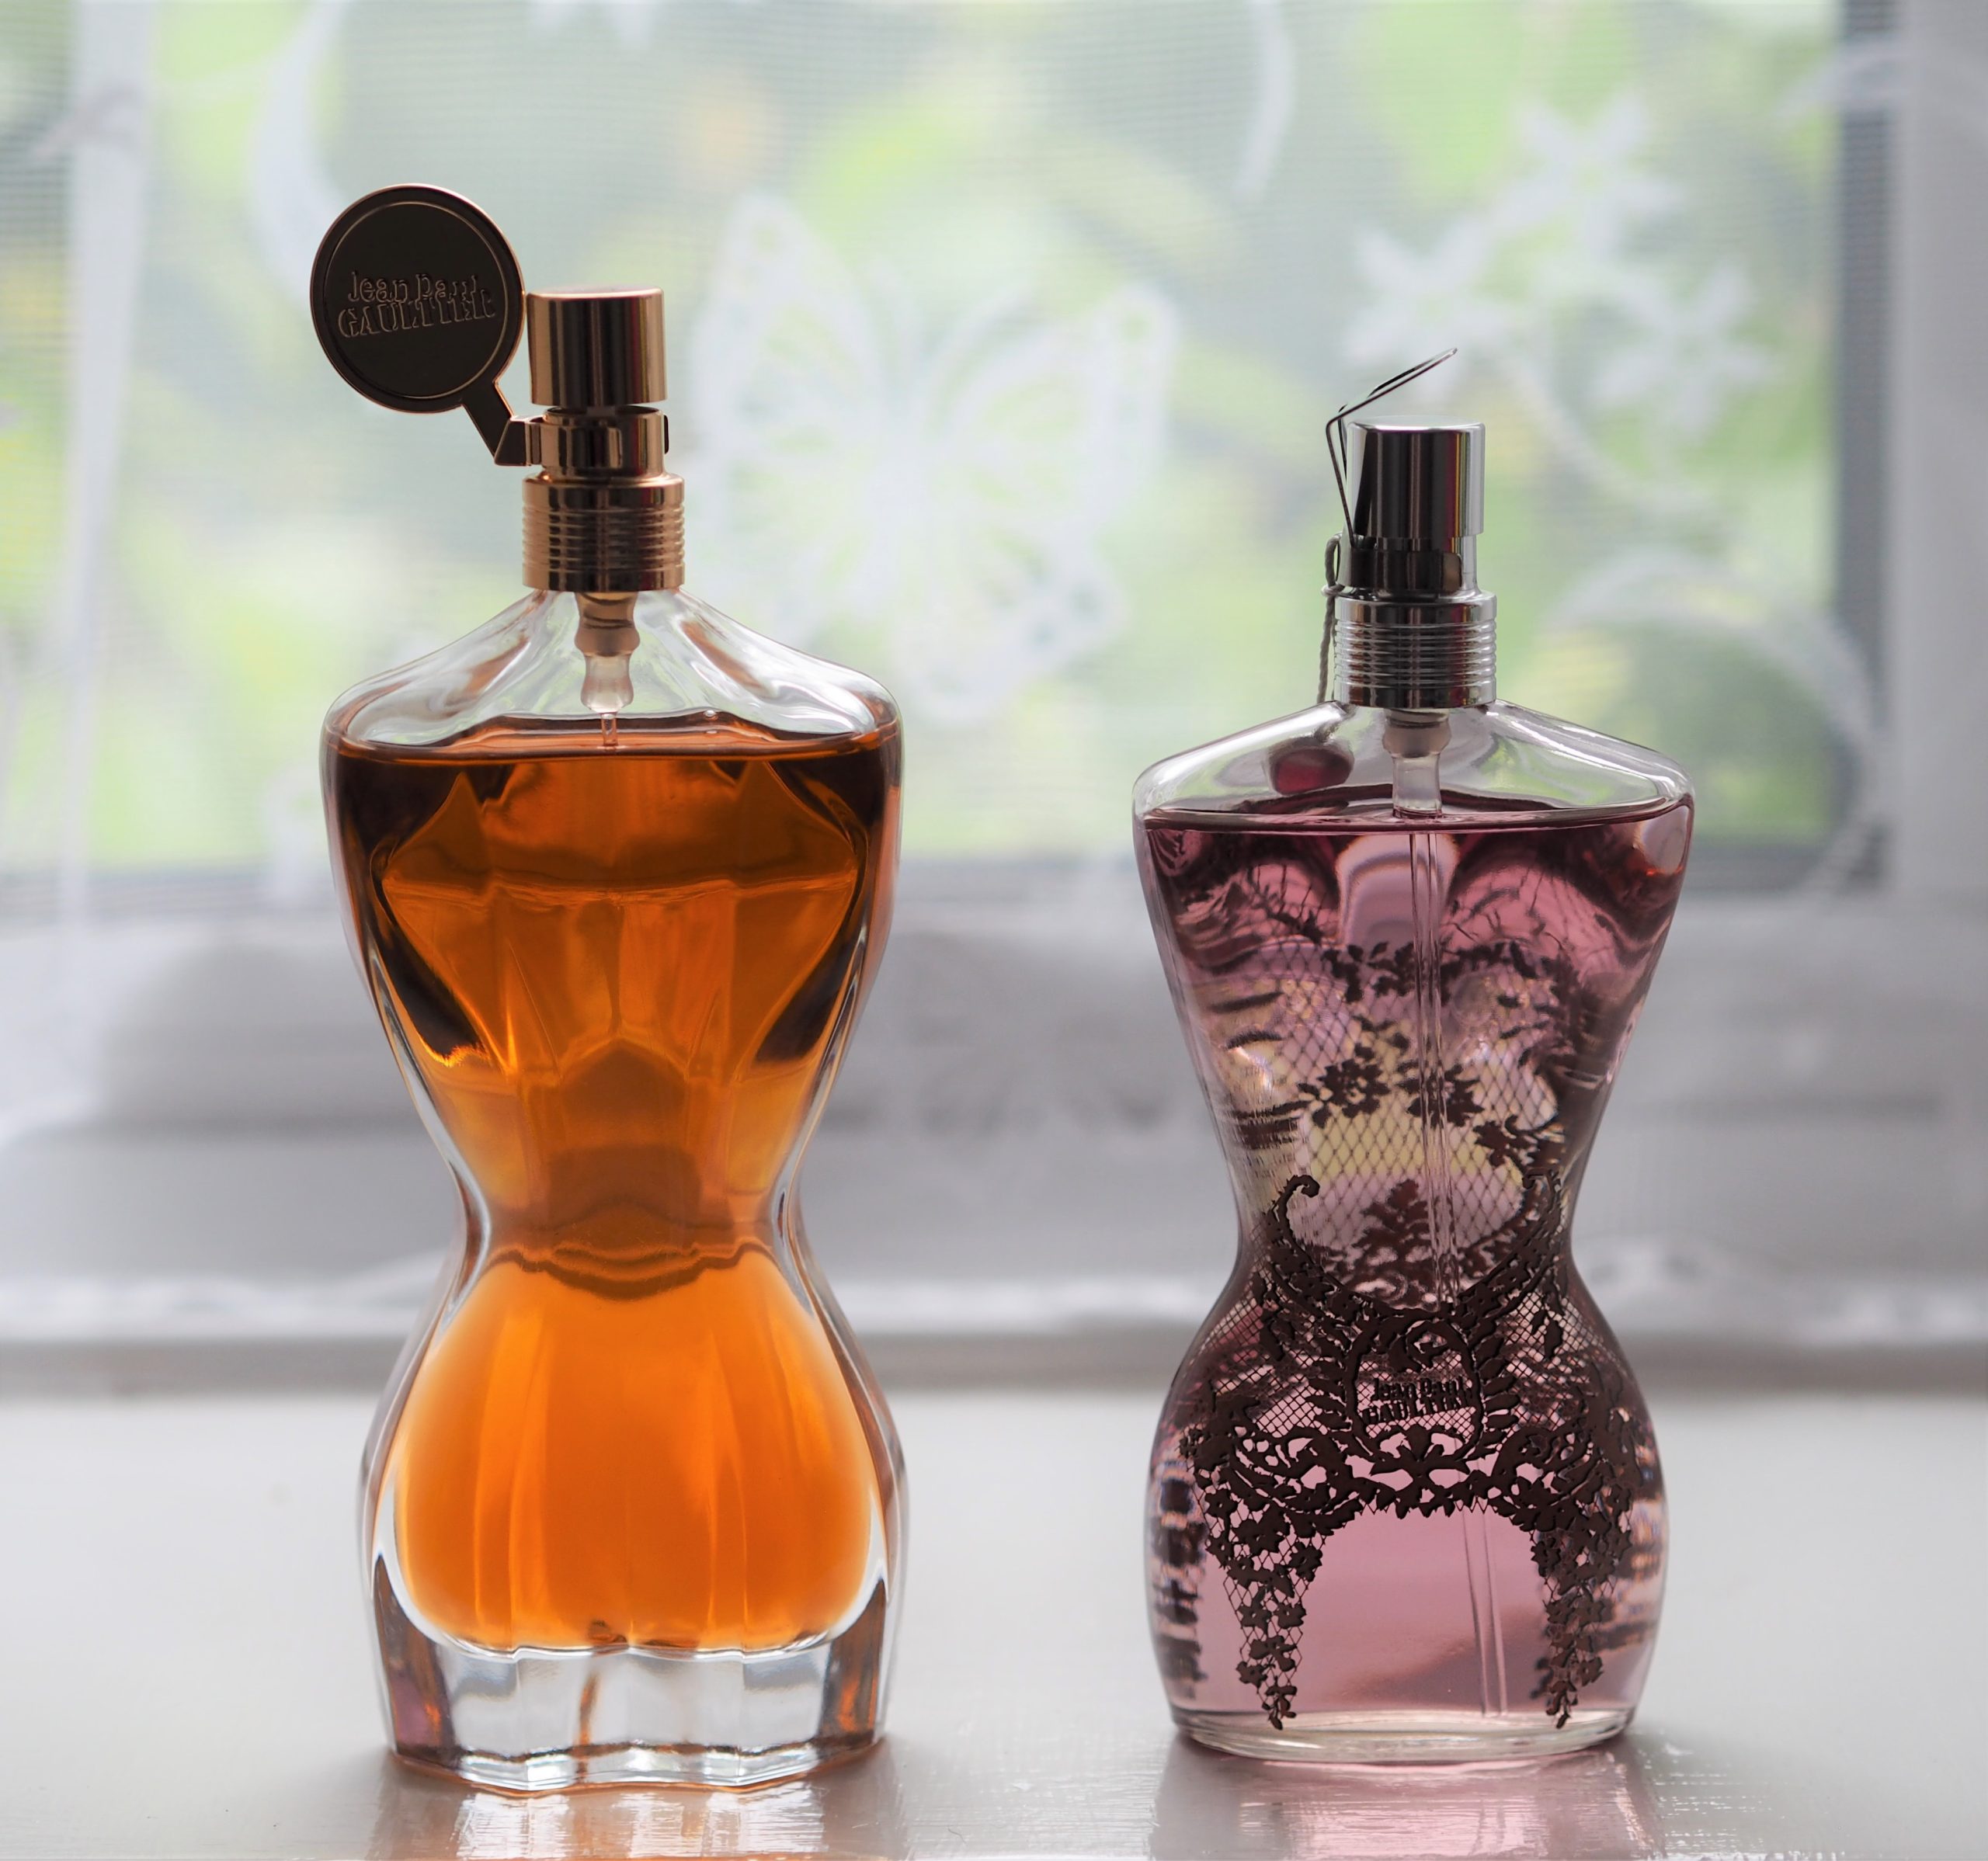 Classique Gaultier Parfum - Original Beauty Essence UK Geek de Jean Paul and